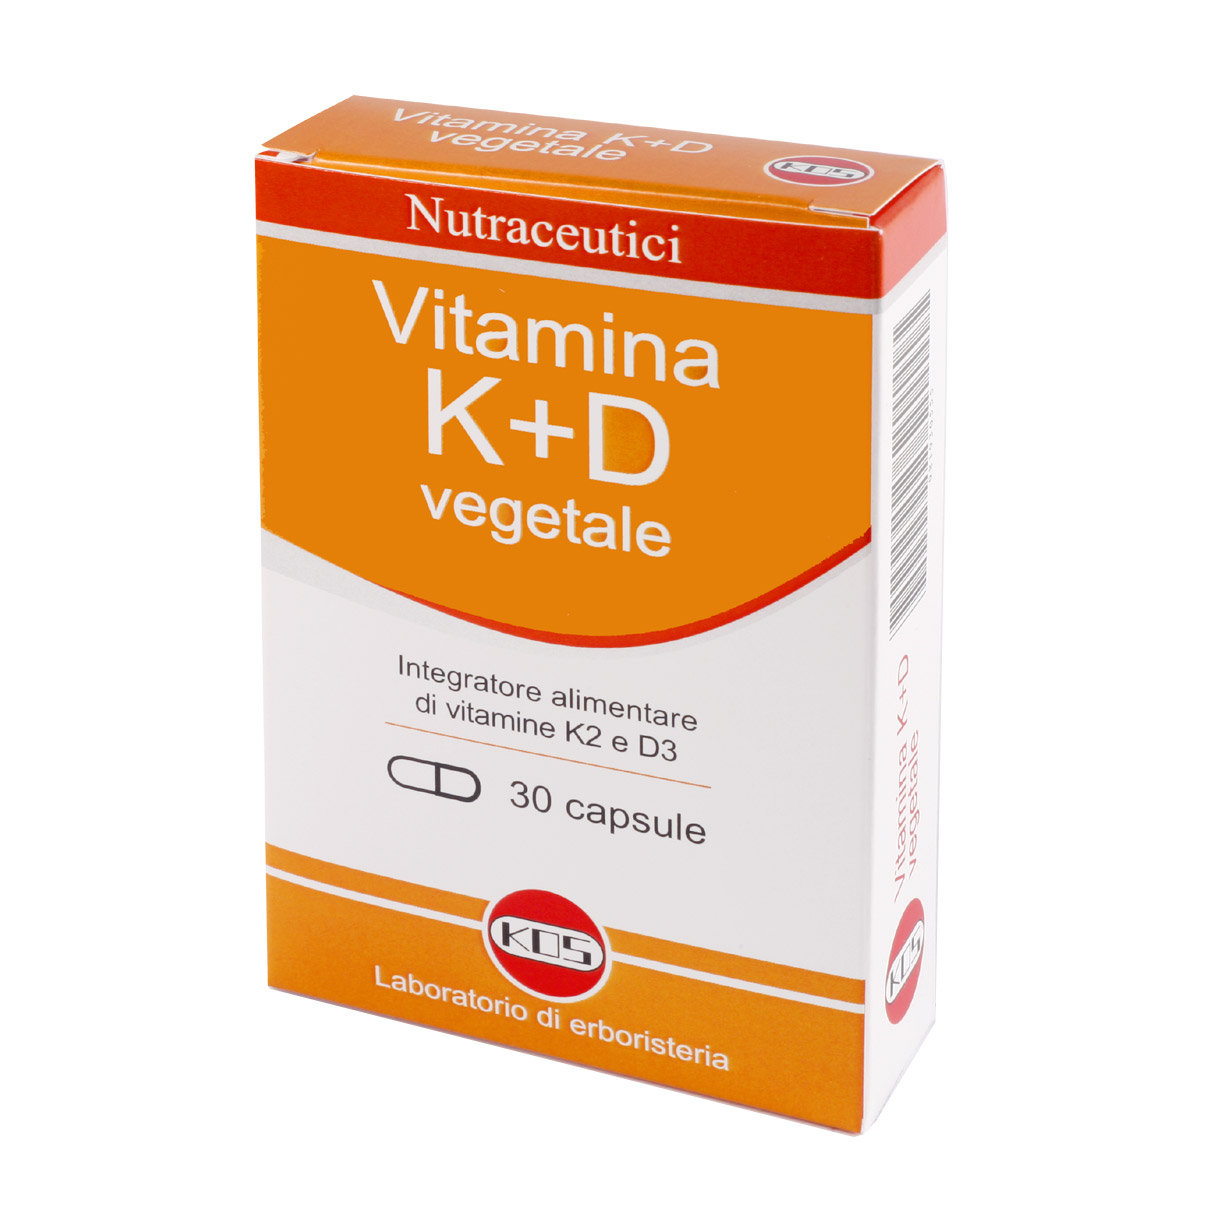 Vitamina K+D 30 capsule